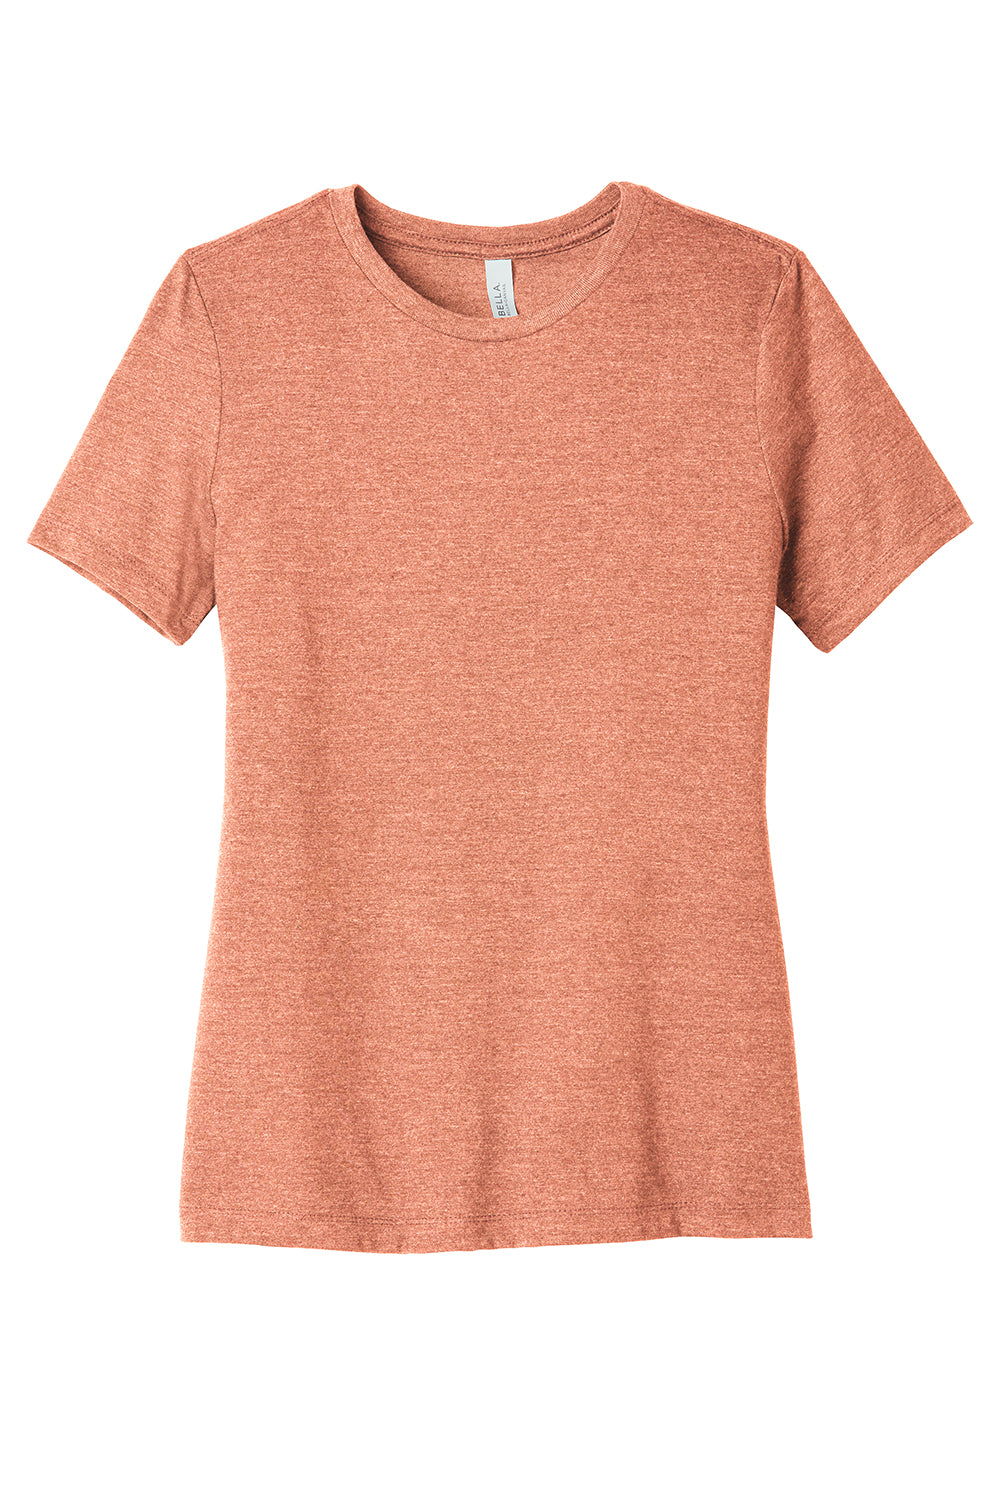 Bella + Canvas BC6400CVC/6400CVC Womens CVC Short Sleeve Crewneck T-Shirt Heather Sunset Red Flat Front